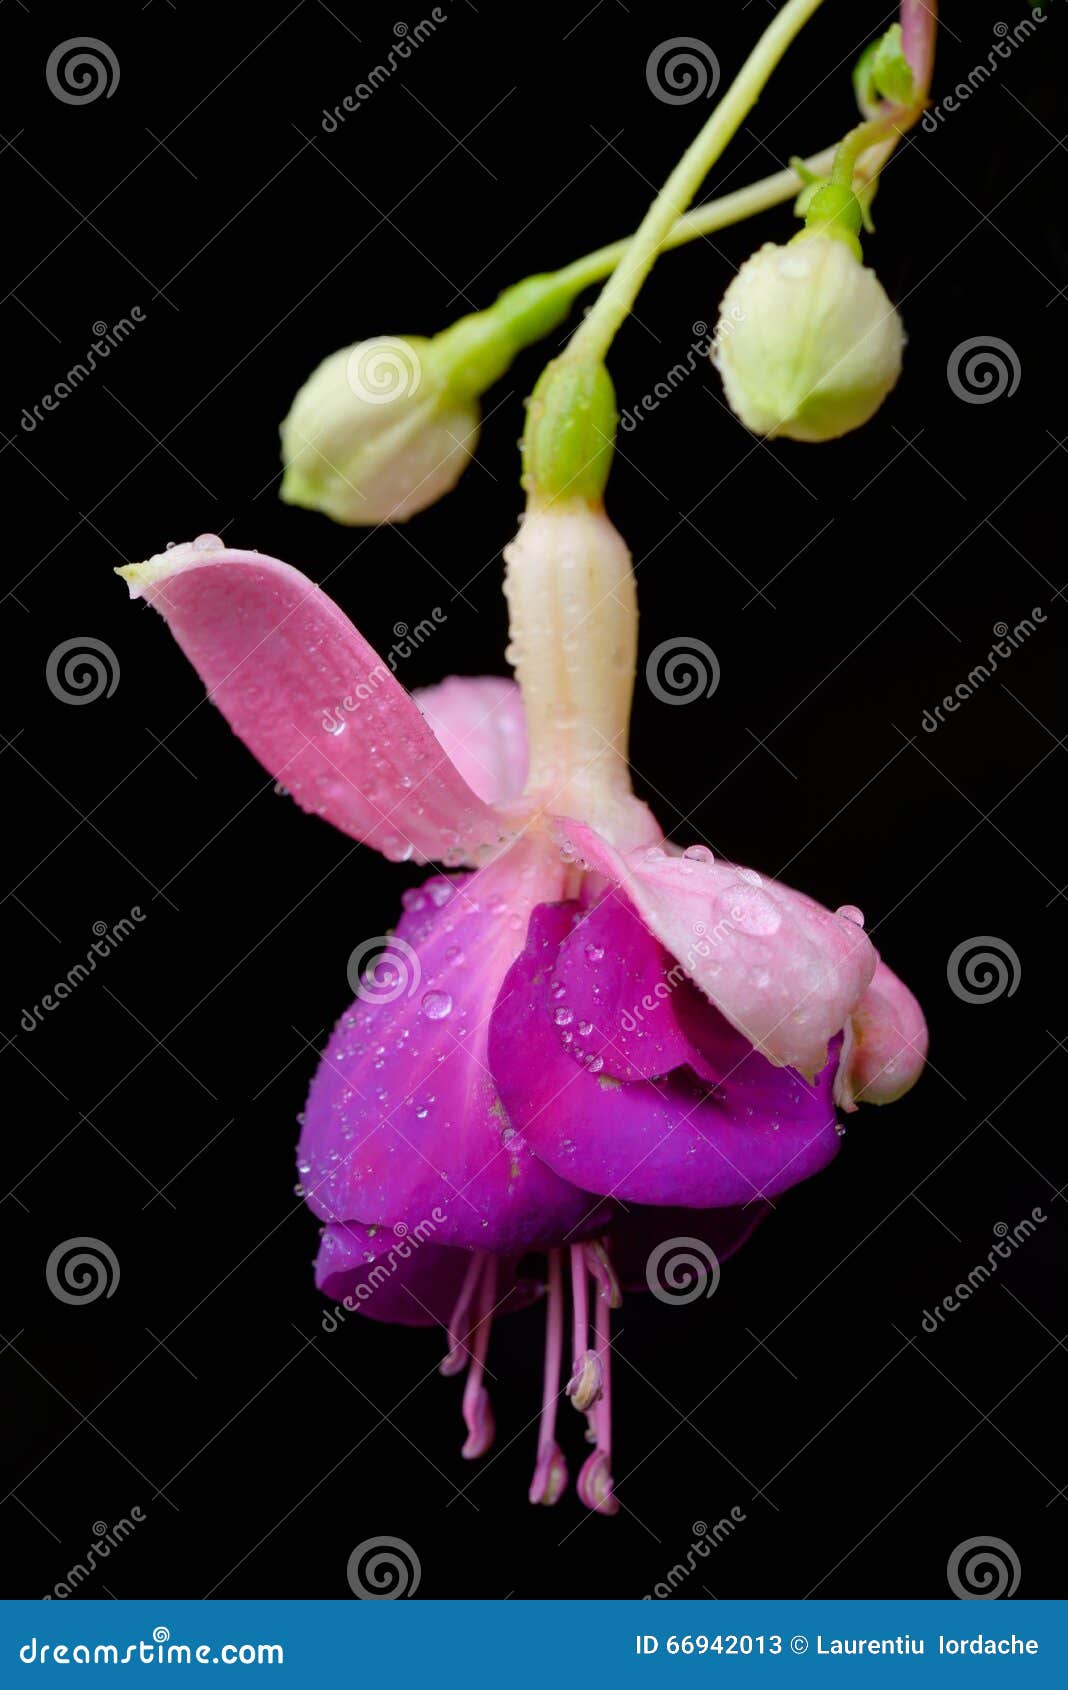 fuchsia flower or onagraceae